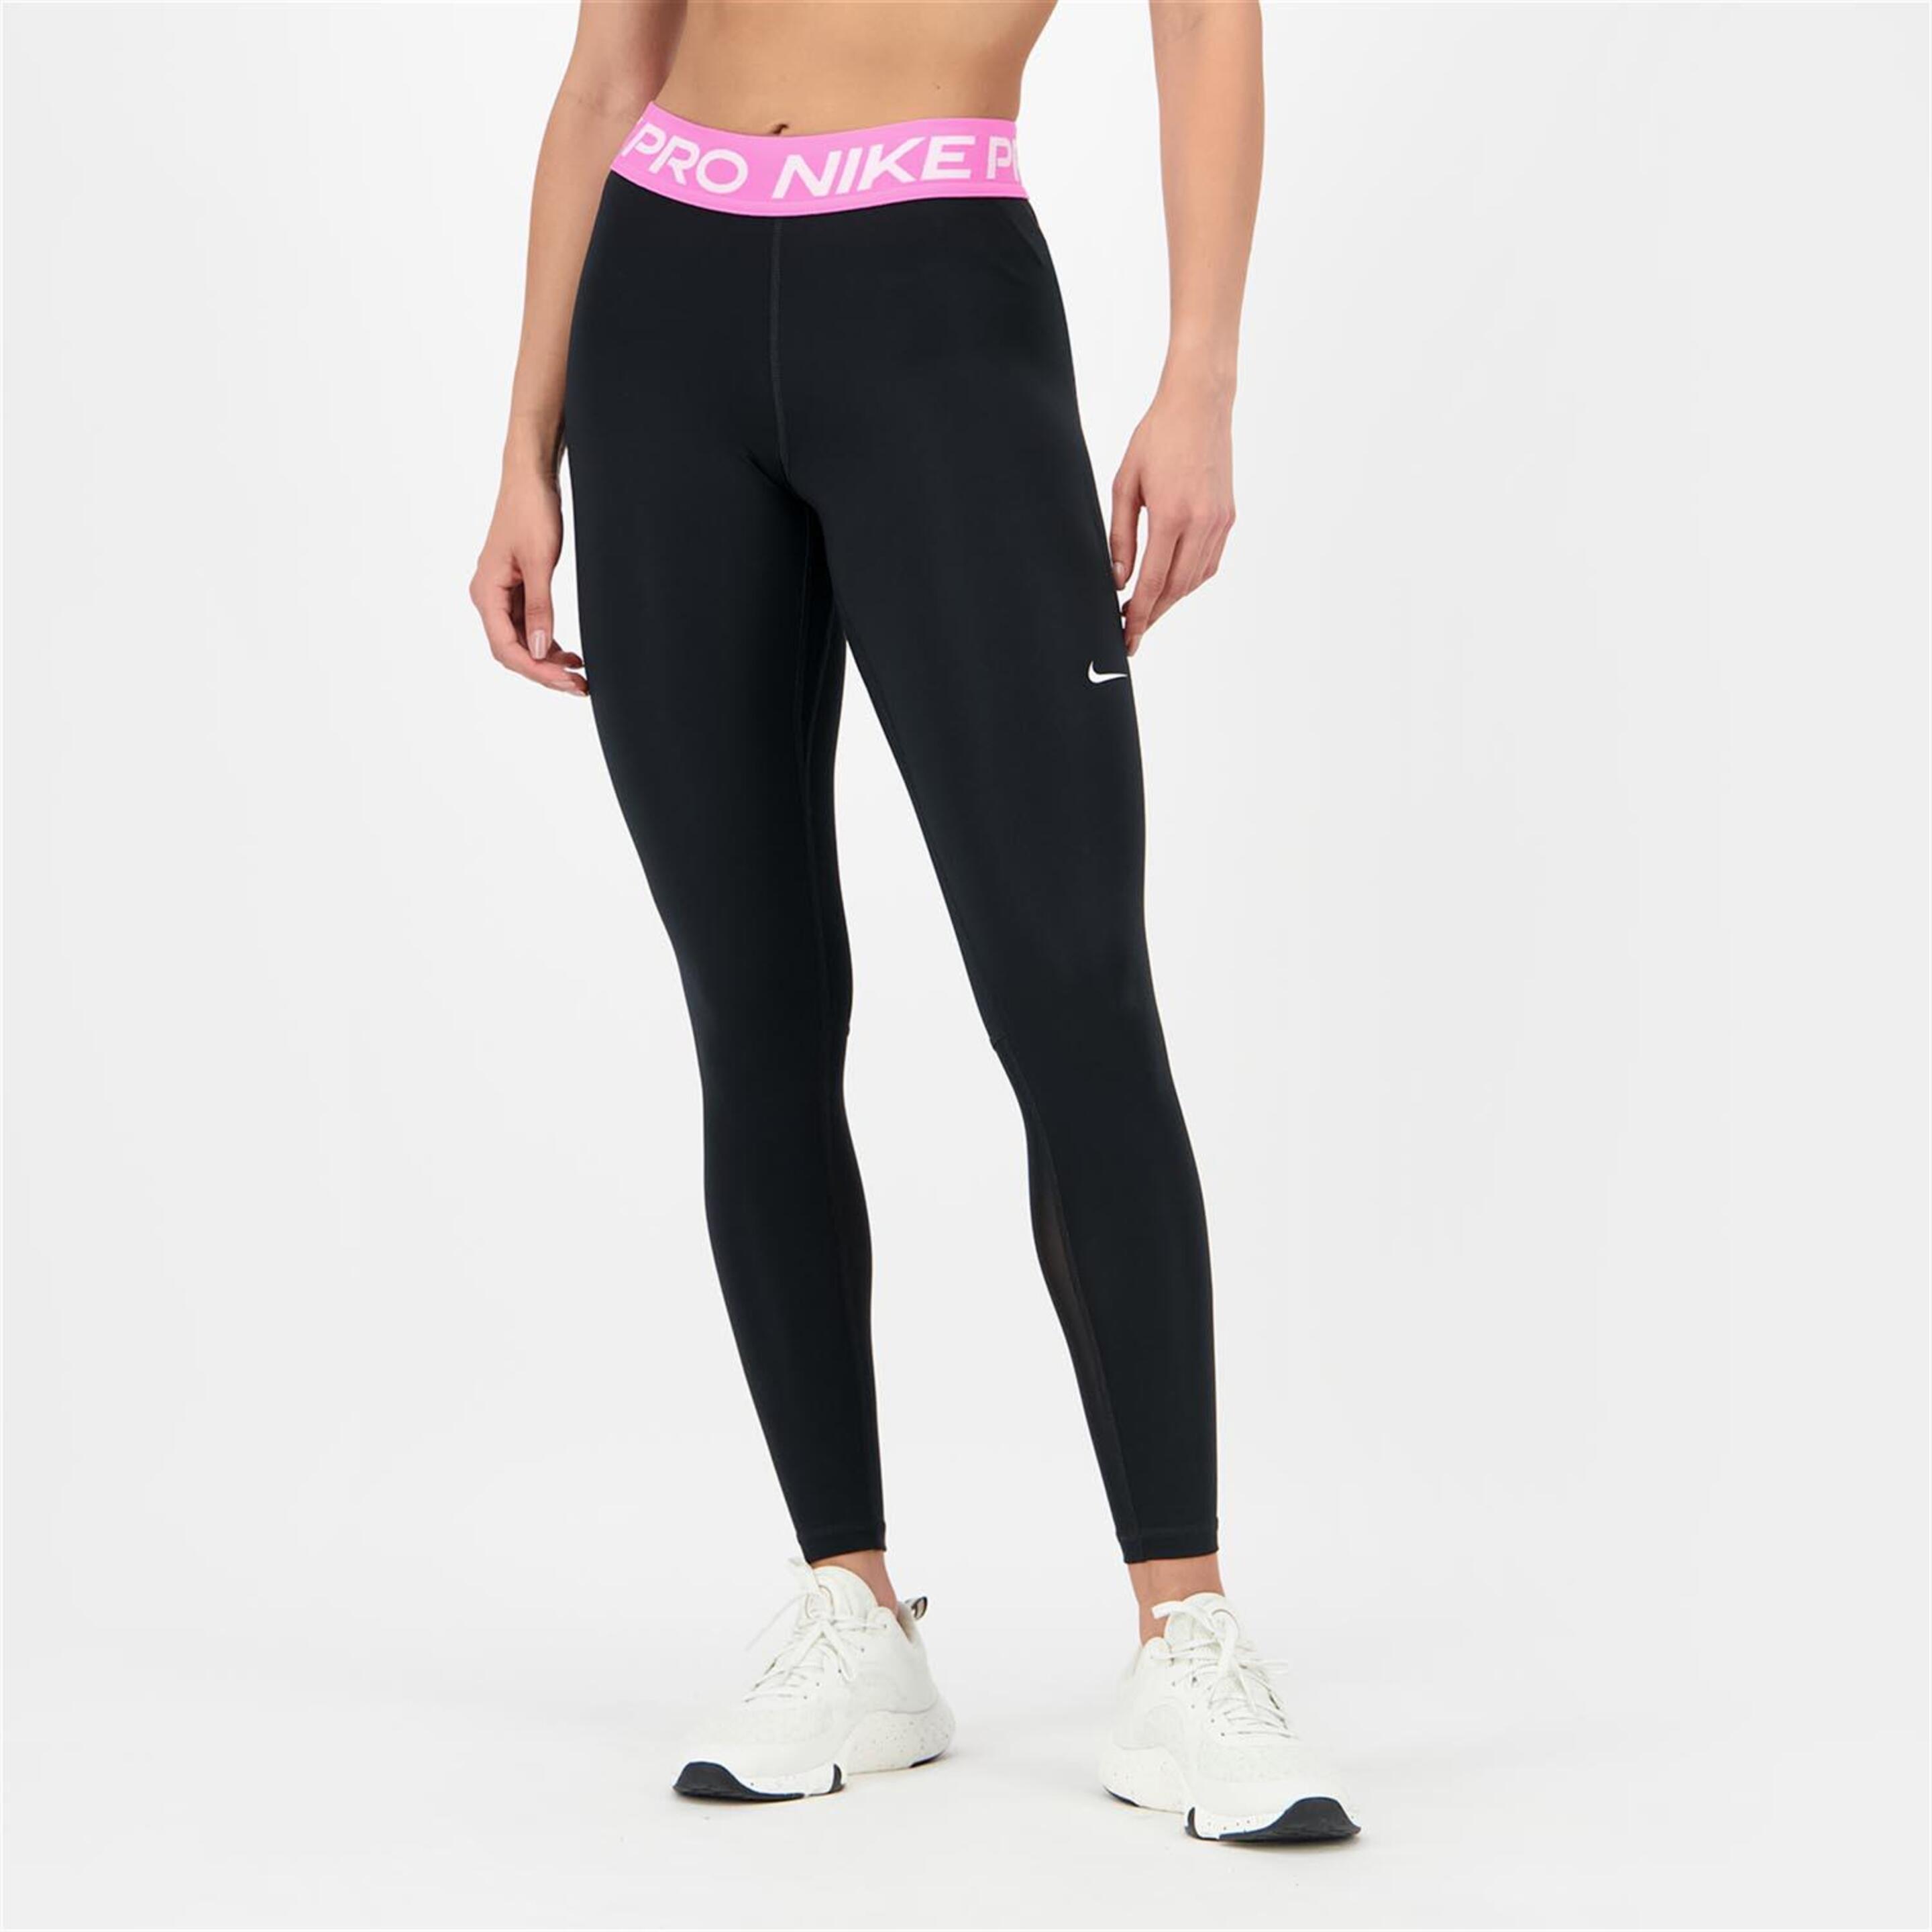 Nike Pro 365 - negro - Mallas Fitness Mujer